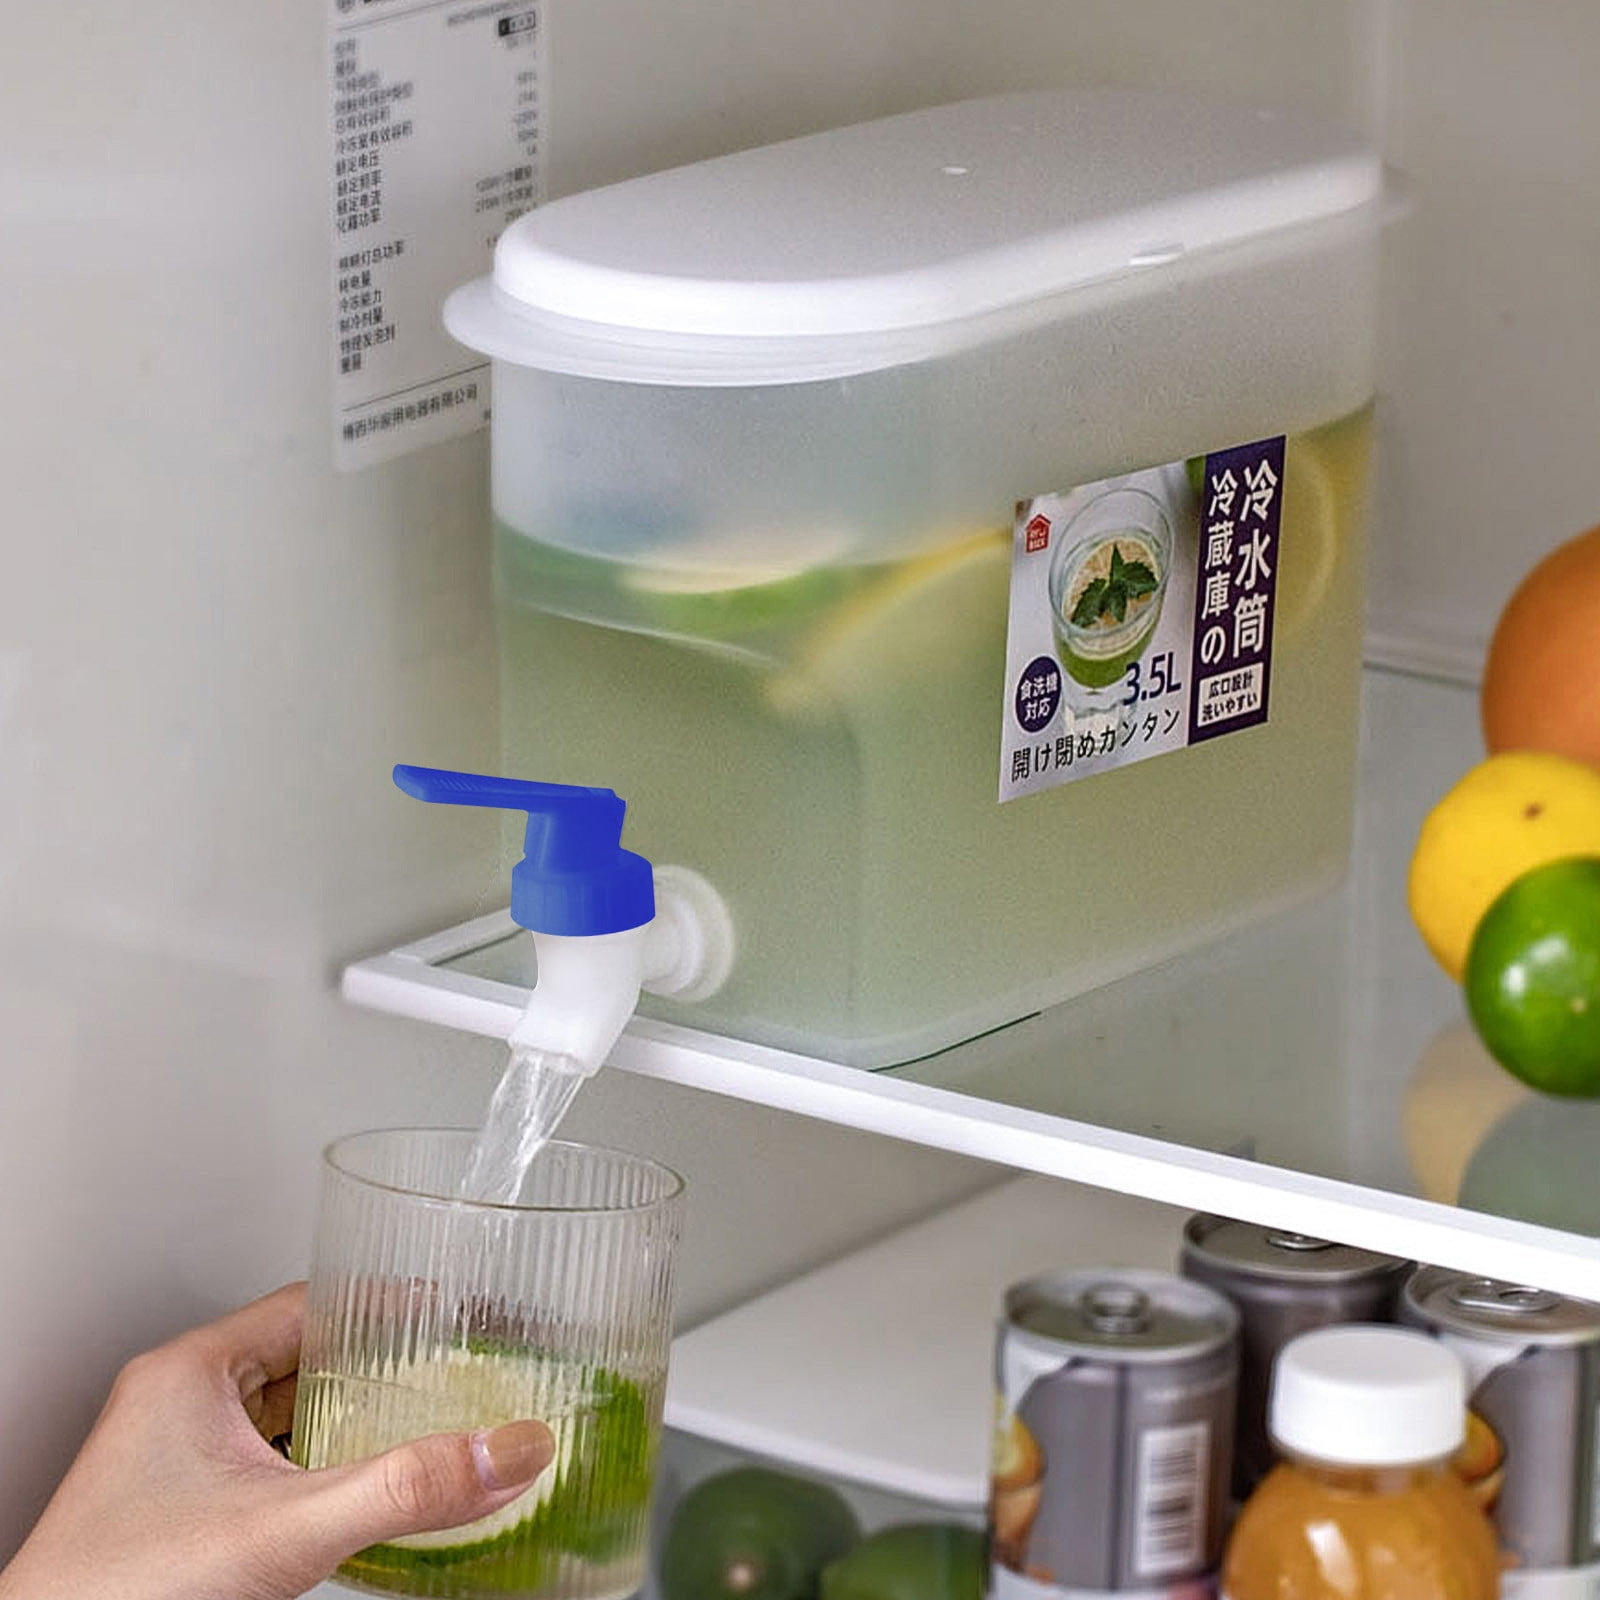 Aurigate 0.66 Gallon Drink Dispenser for Fridge Beverage Dispenser with Spigot Juice Milk Hot Water Dispenser Plastic Pitcher with Spout Clear Drink